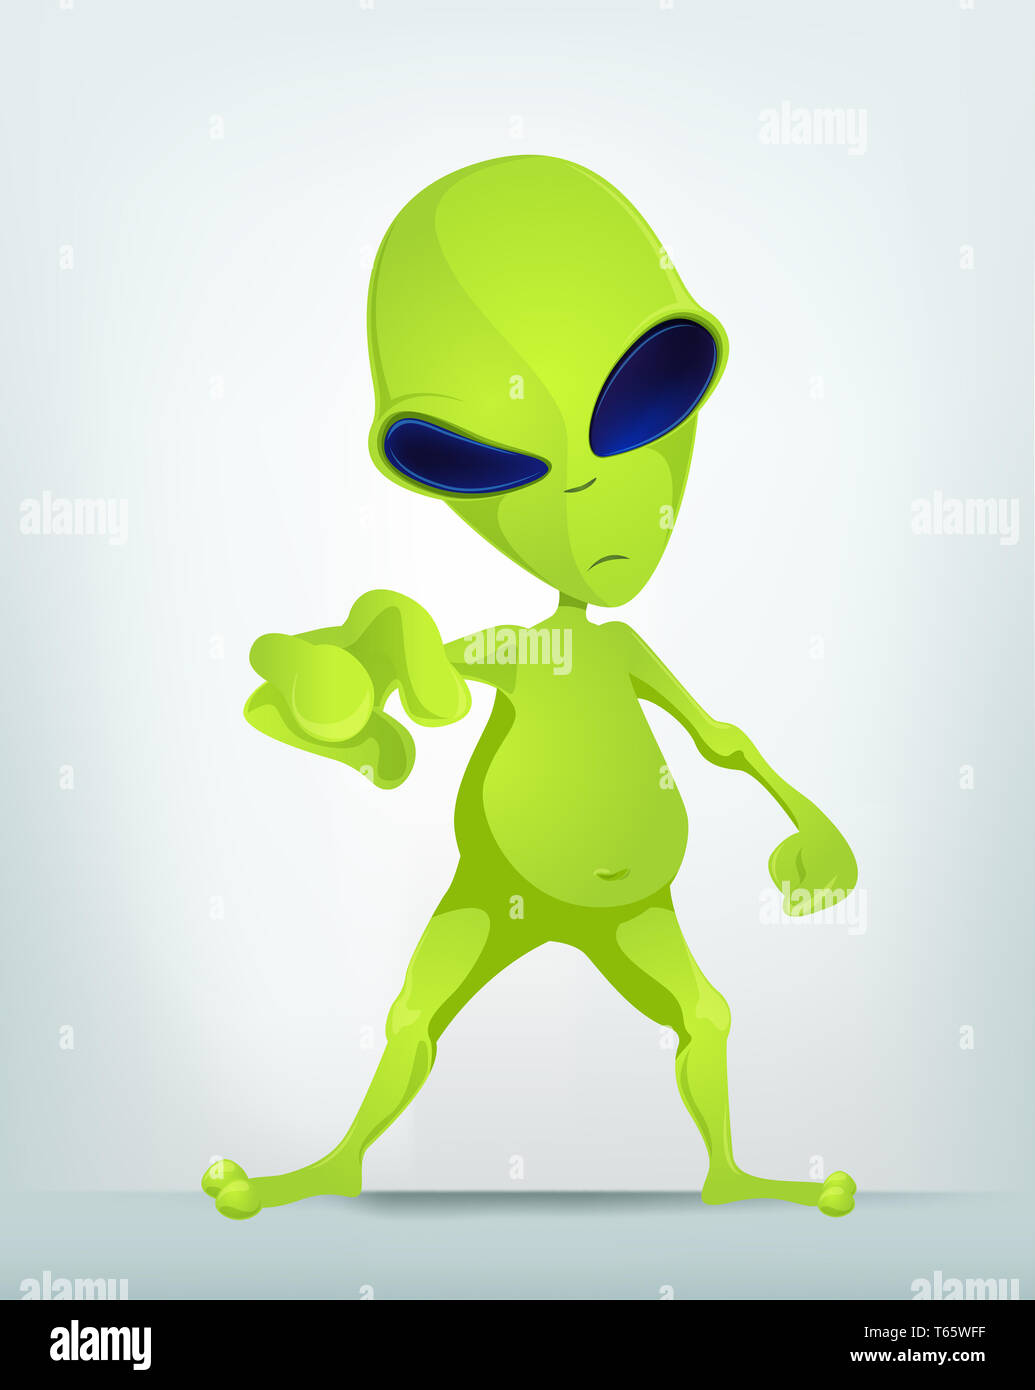 Funny Alien Stock Photo